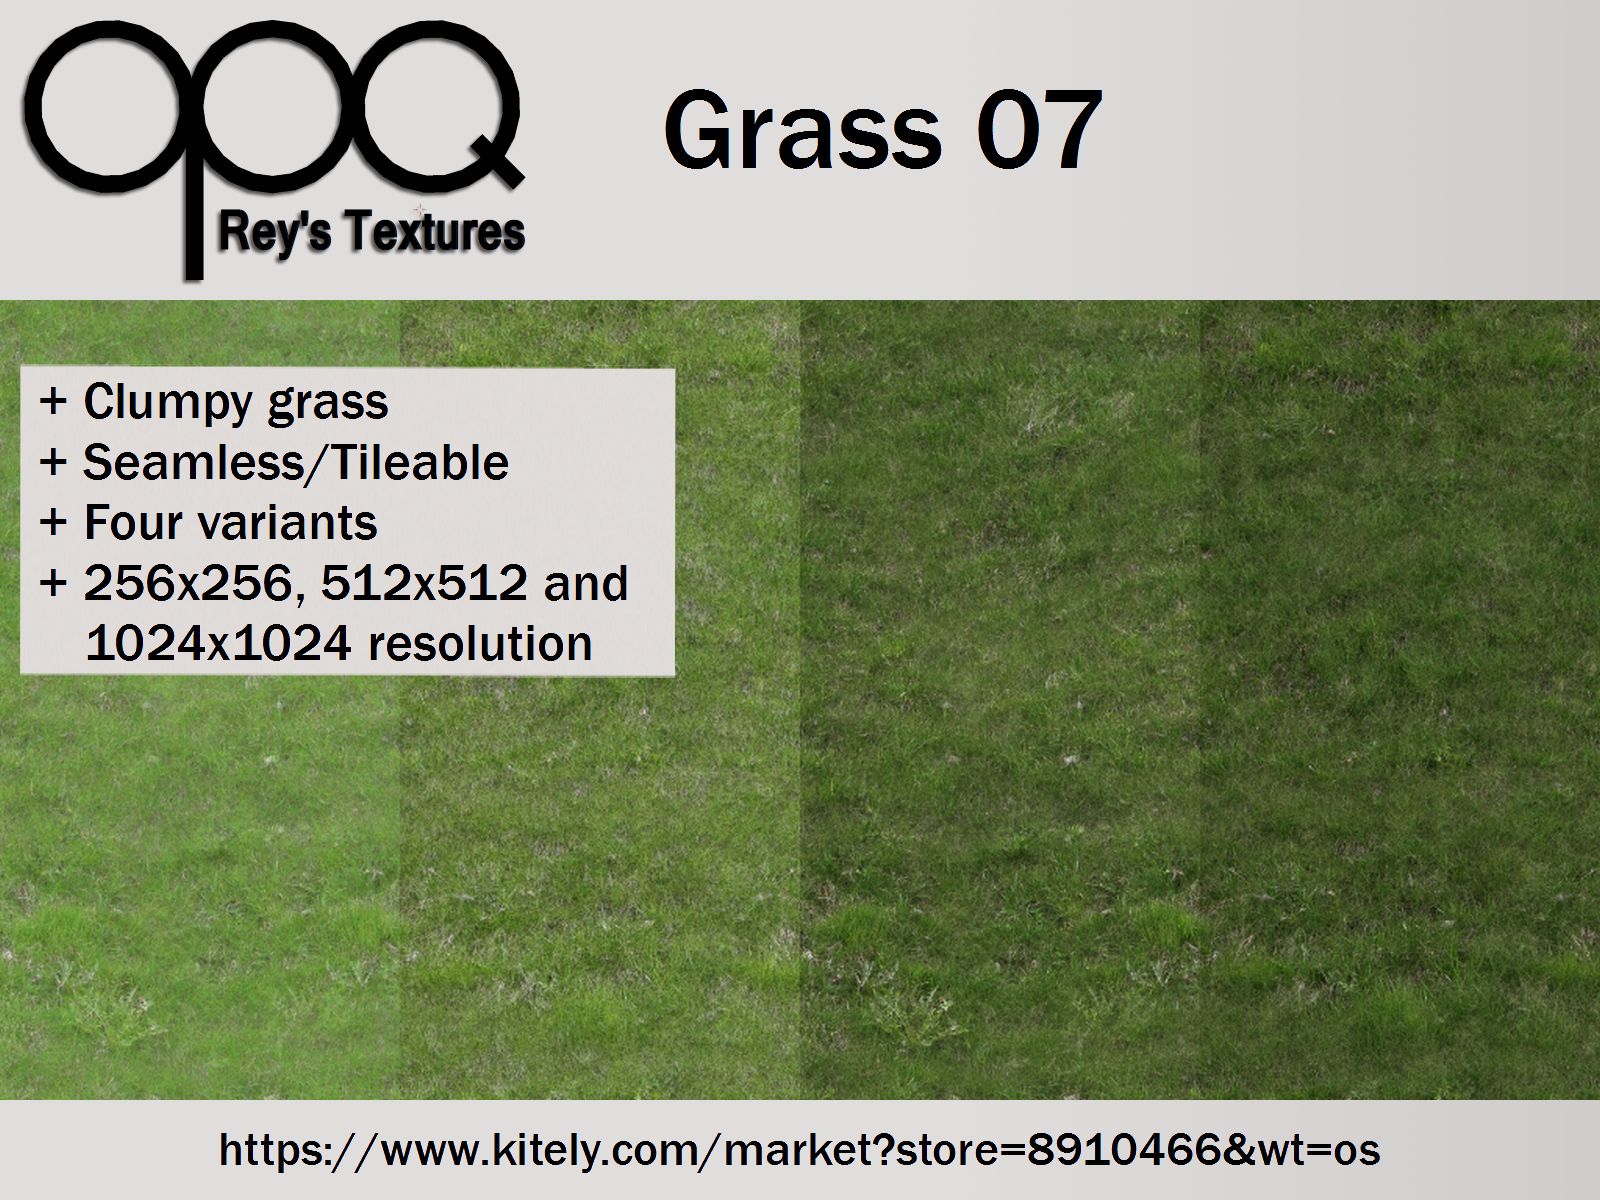 Rey's Grass 07 Poster Kitely.jpg